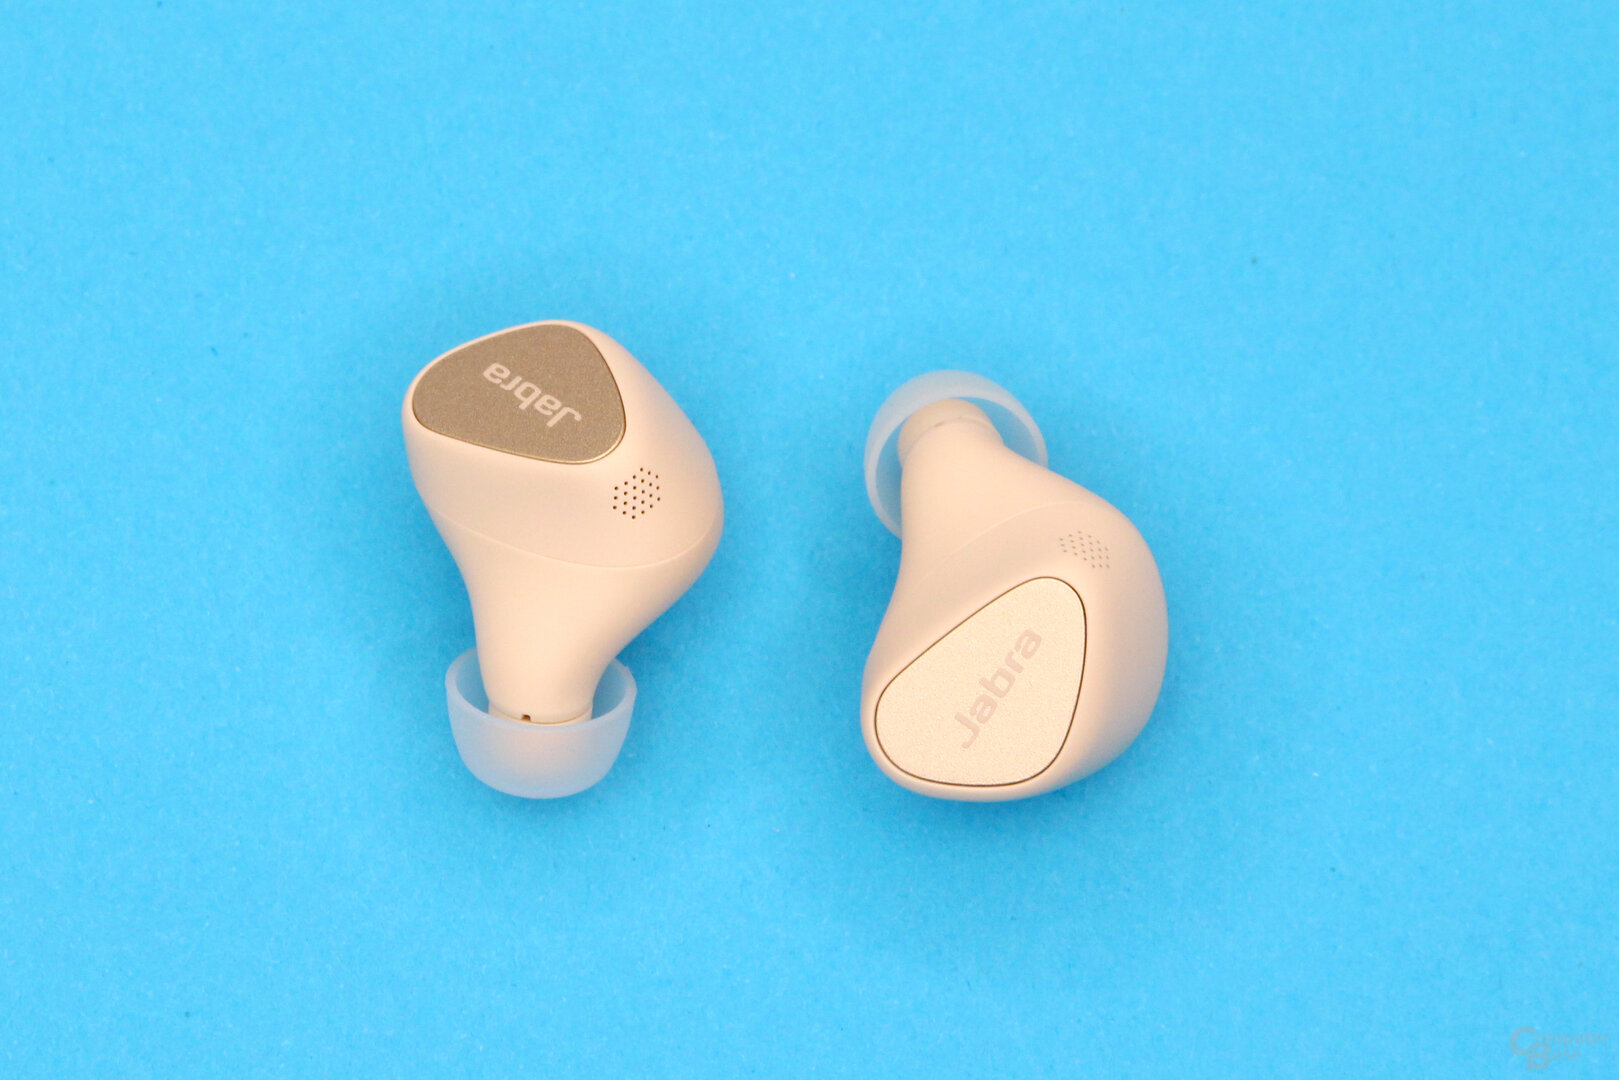 Elite In-Ear-Kopfhörer Test ComputerBase 5 im - kabellose Jabra